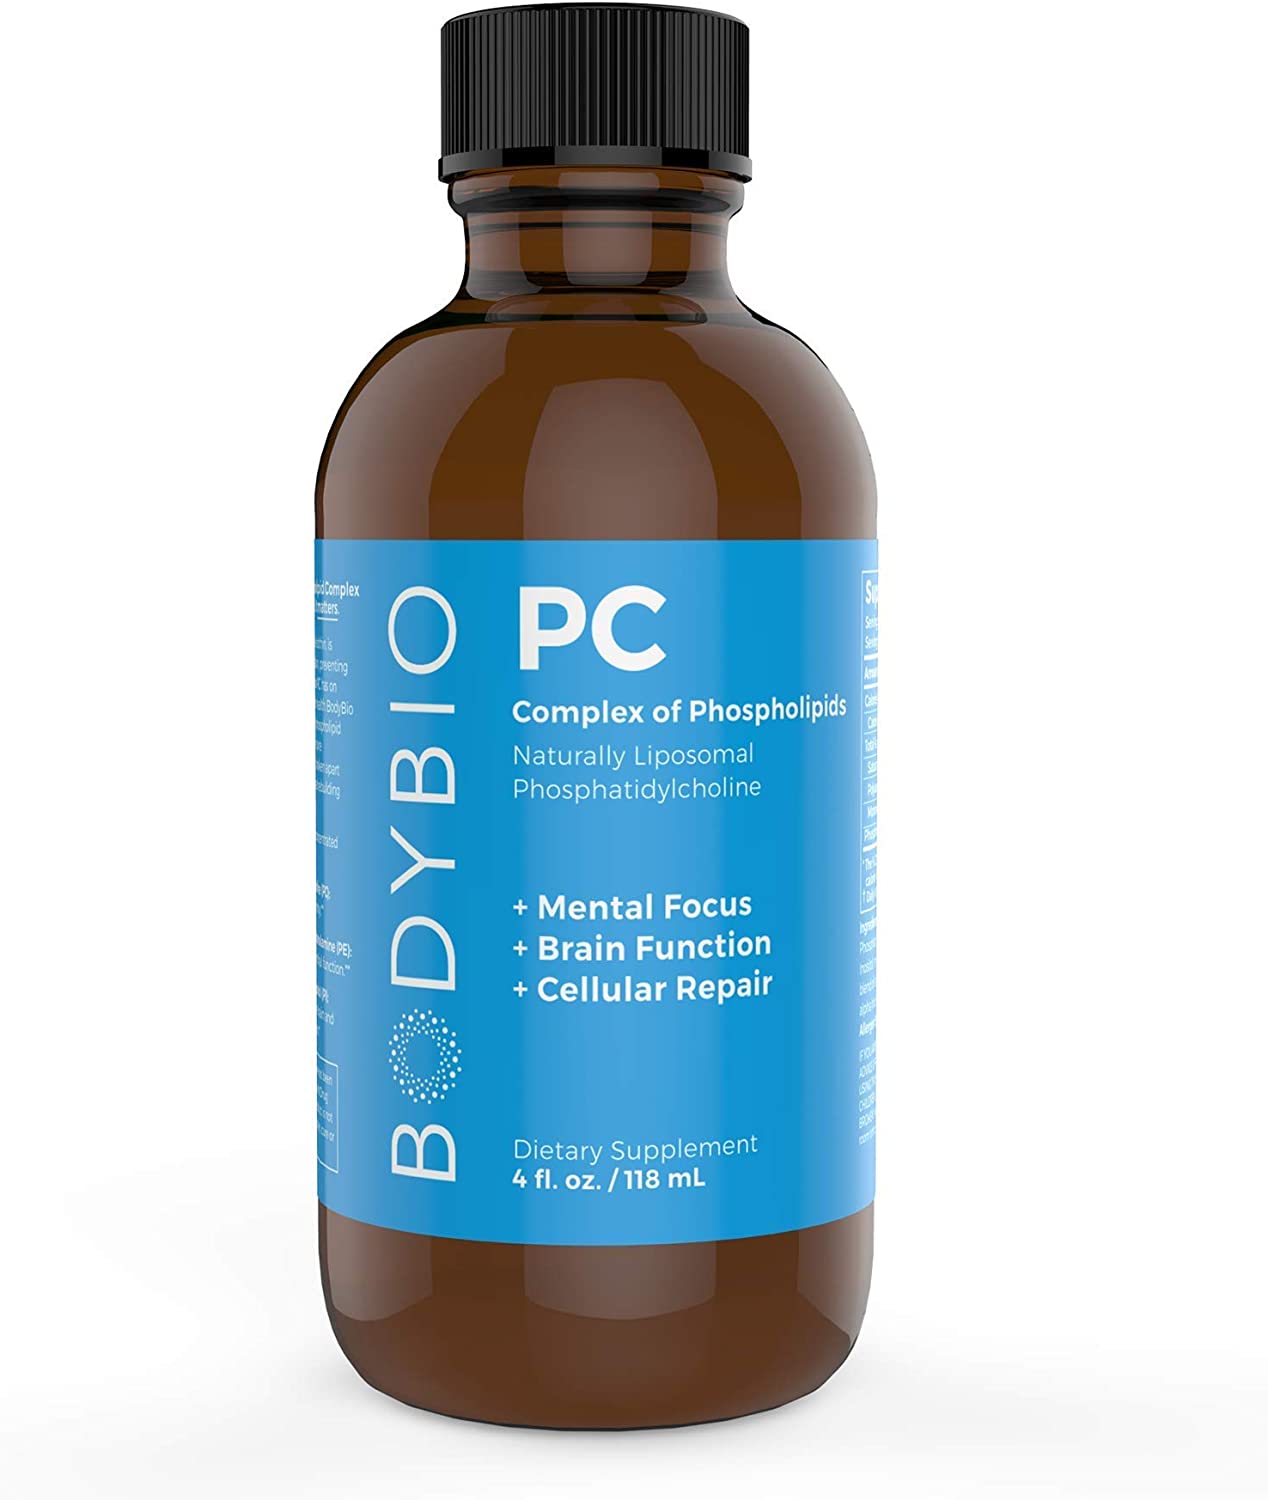 BodyBio Complex of Phospholipid Supplement - 118 ml